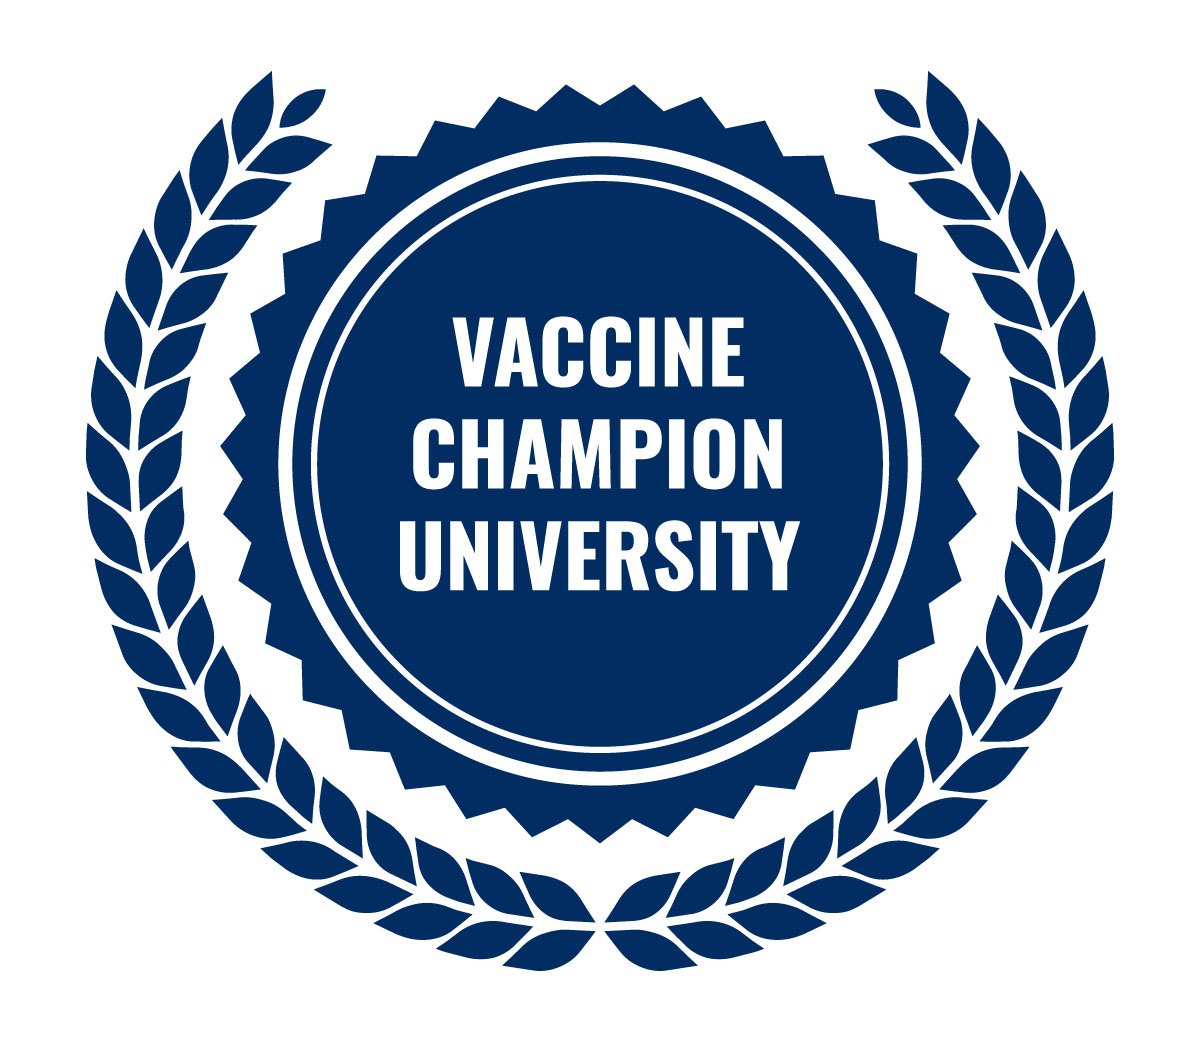 Vaccine Champion University logo